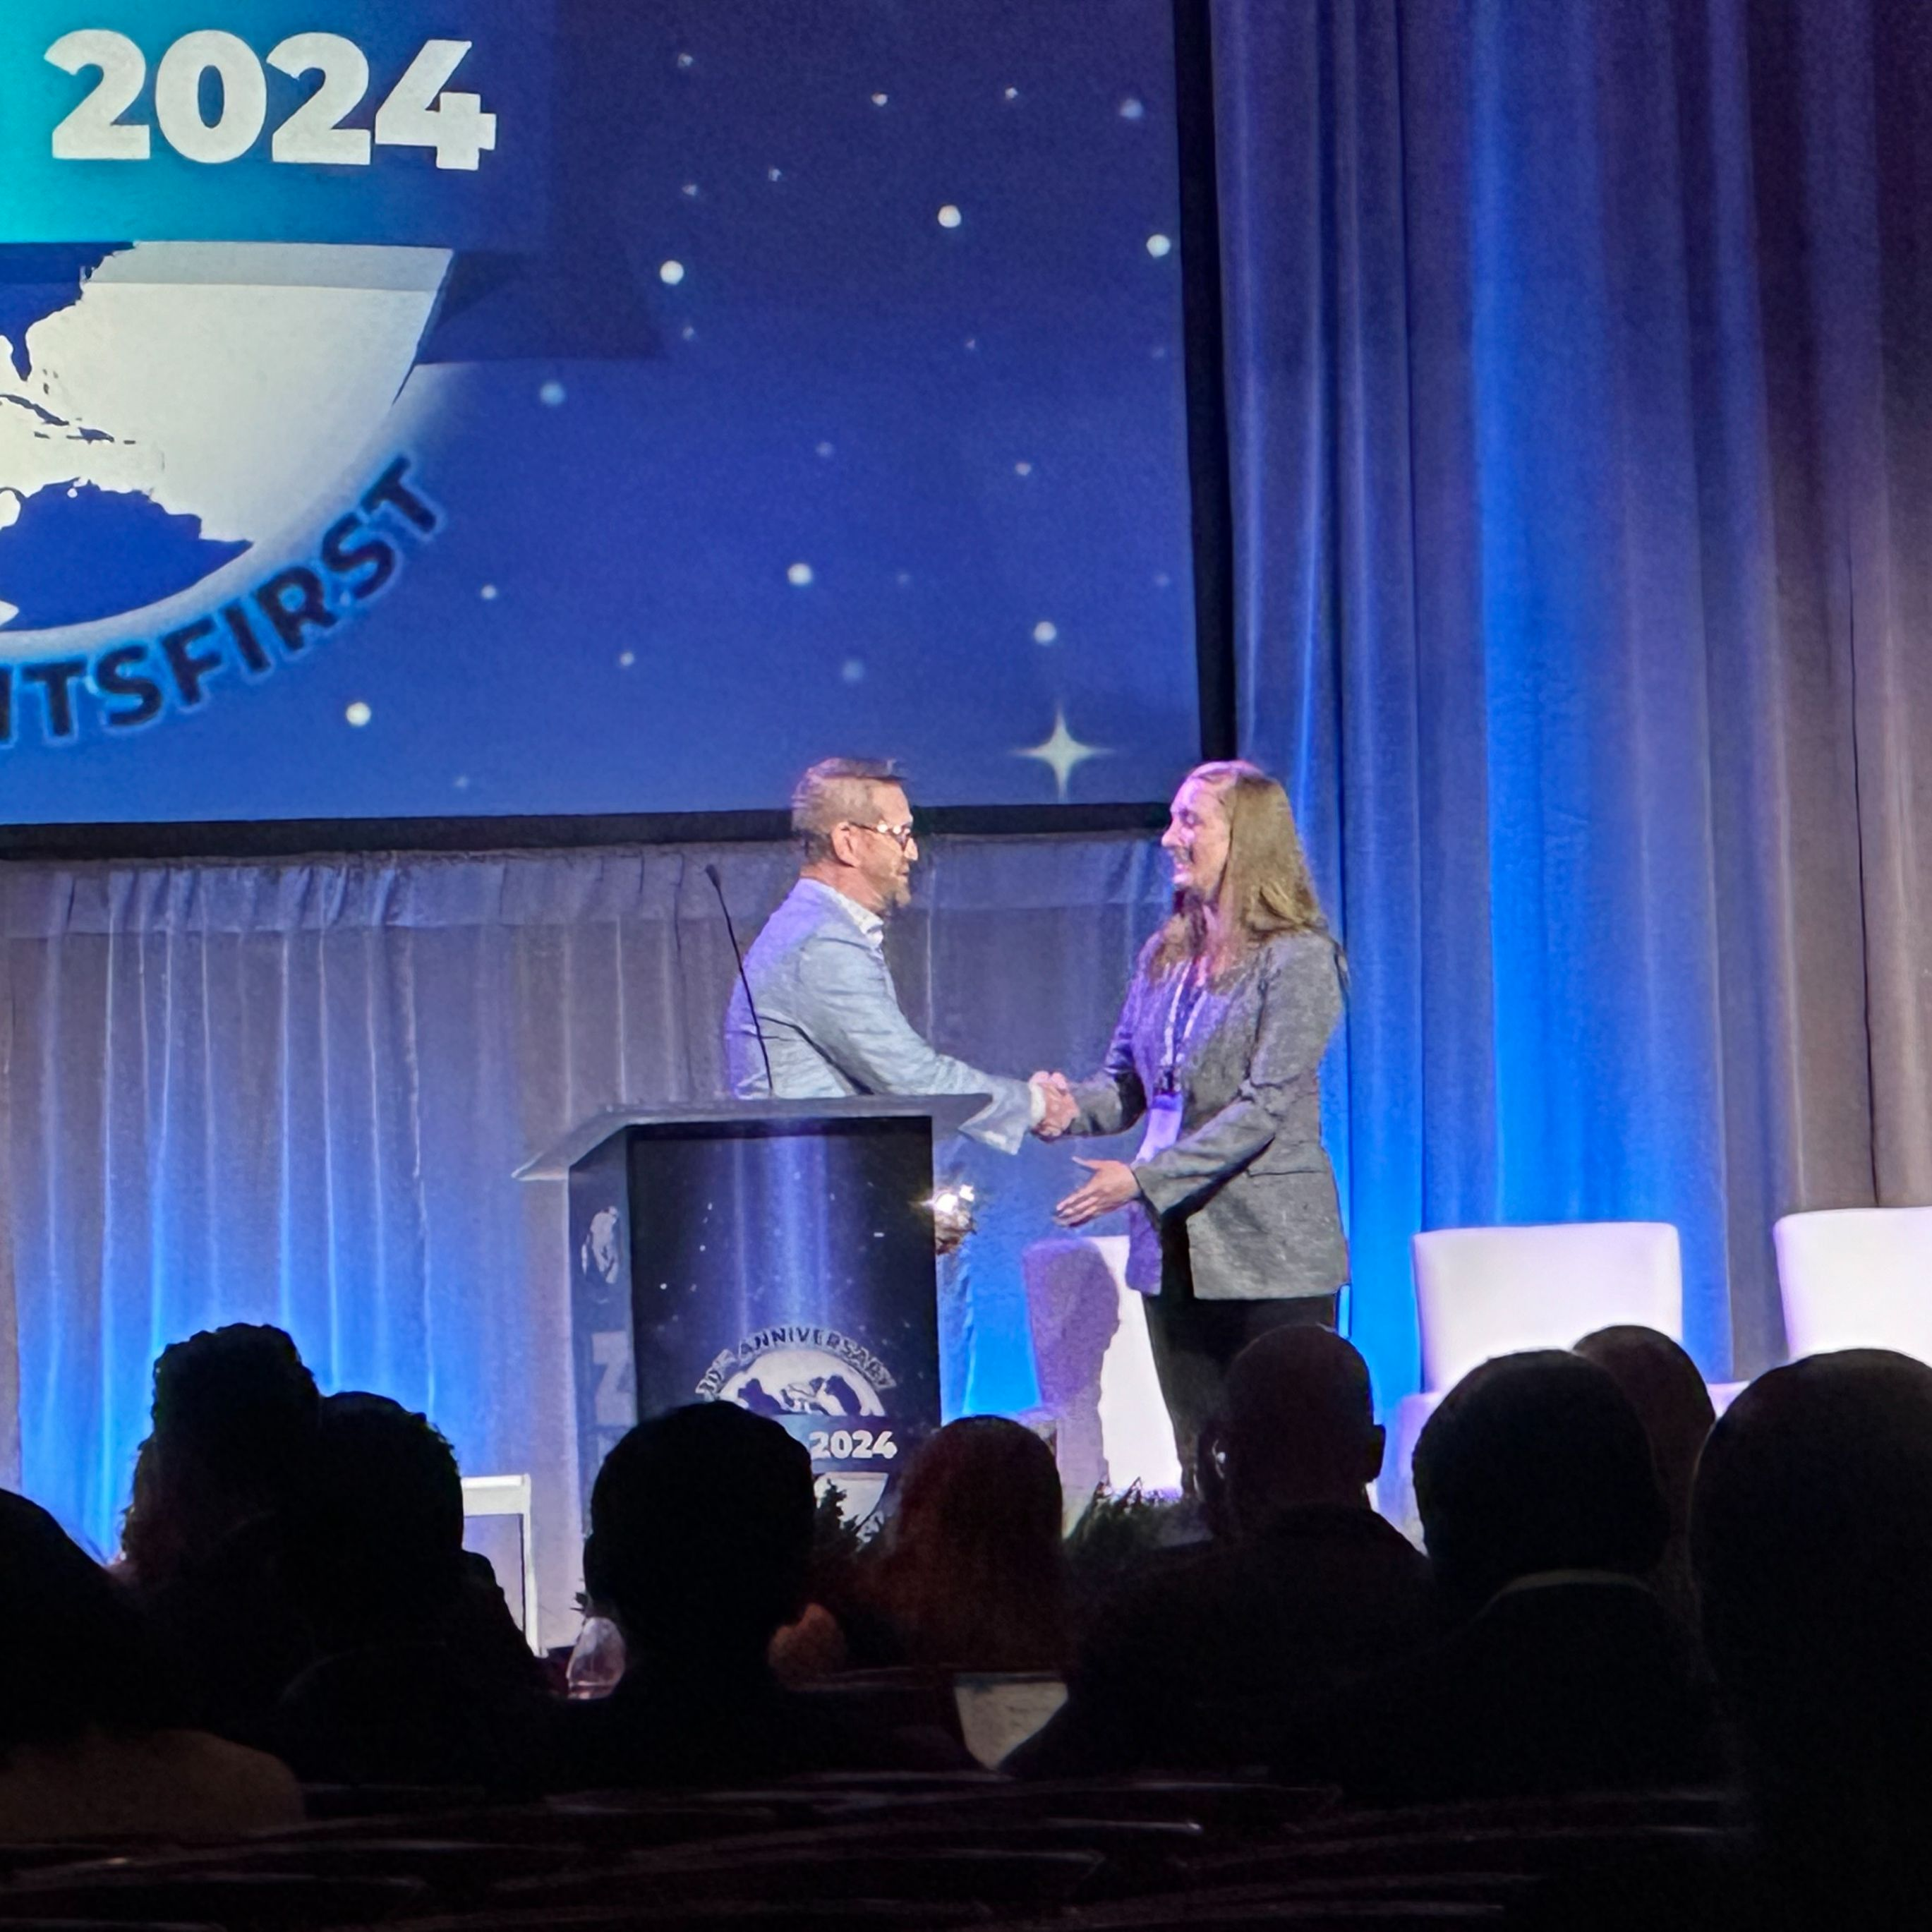 SPARC investigator, Nikki Pelot, received an award.